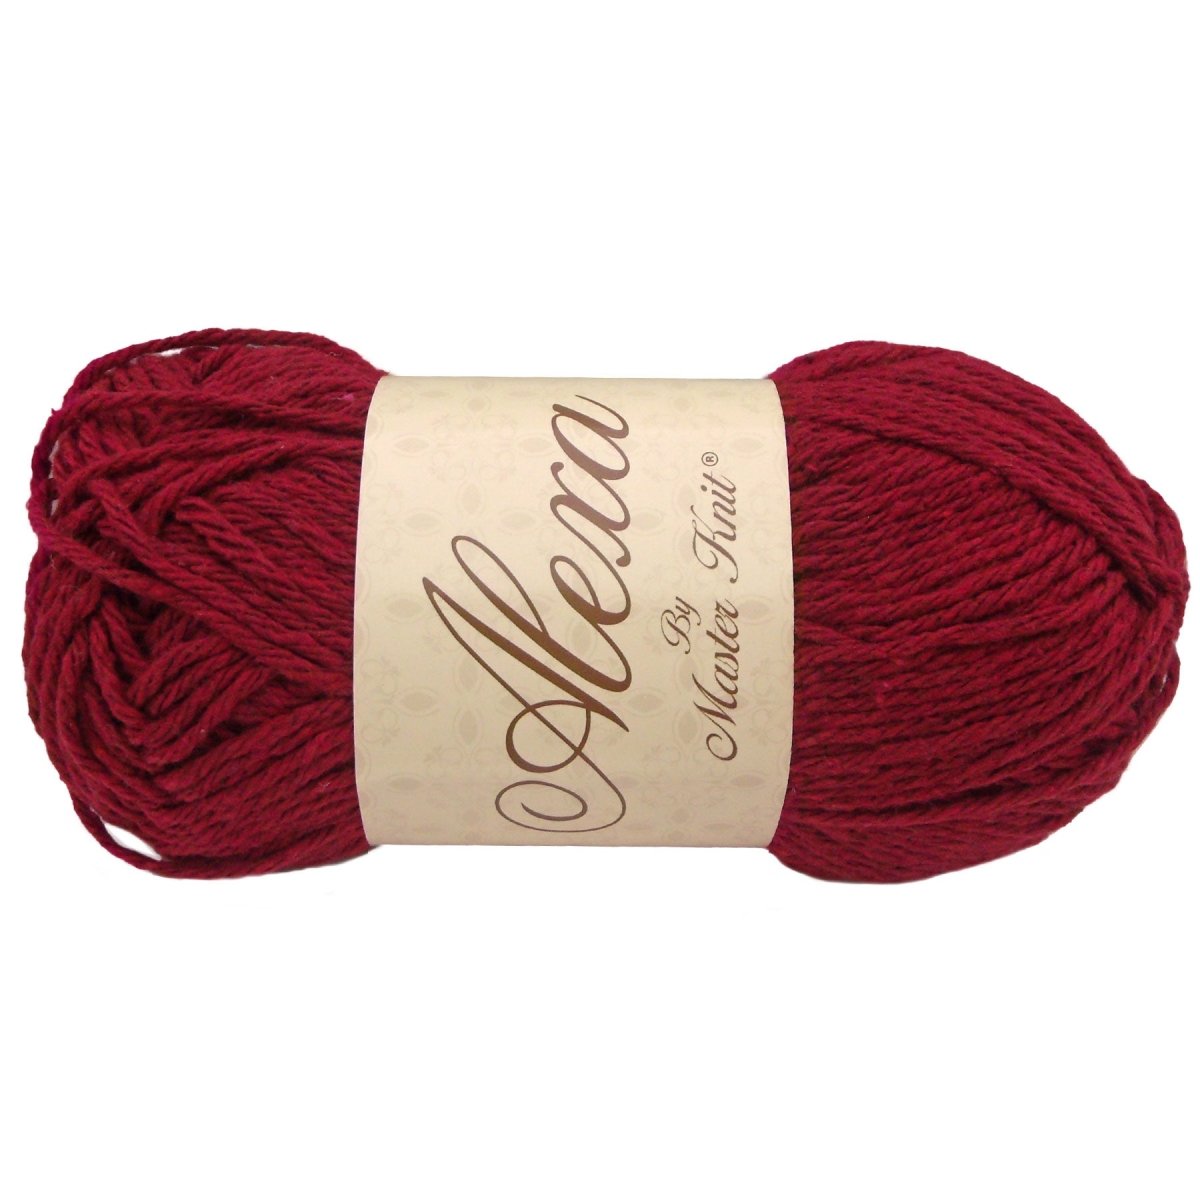 ALEXA - Crochetstores9340-105